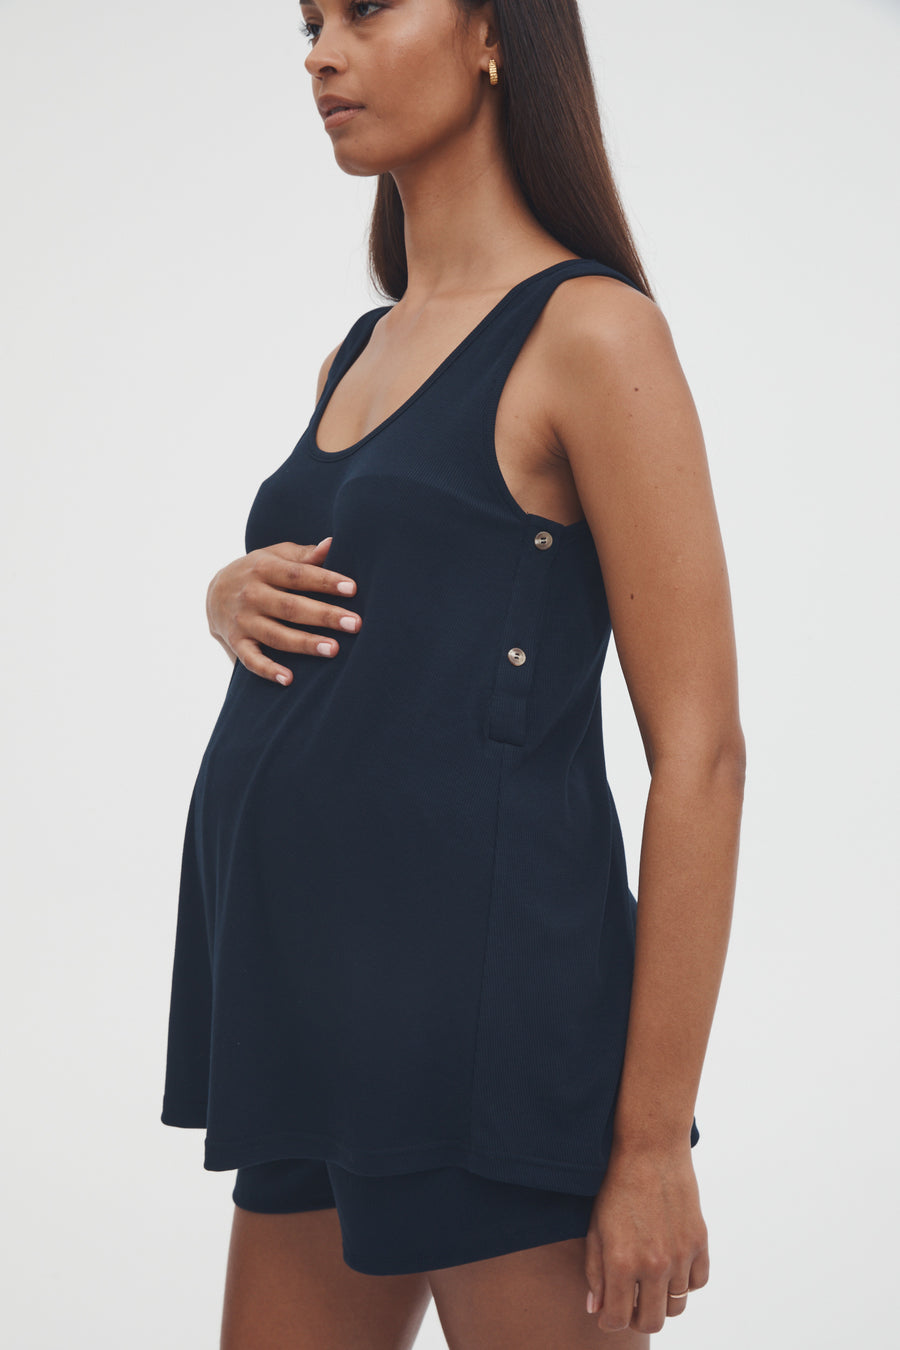 Overbump Stretchy Maternity Shorts (Navy) 4